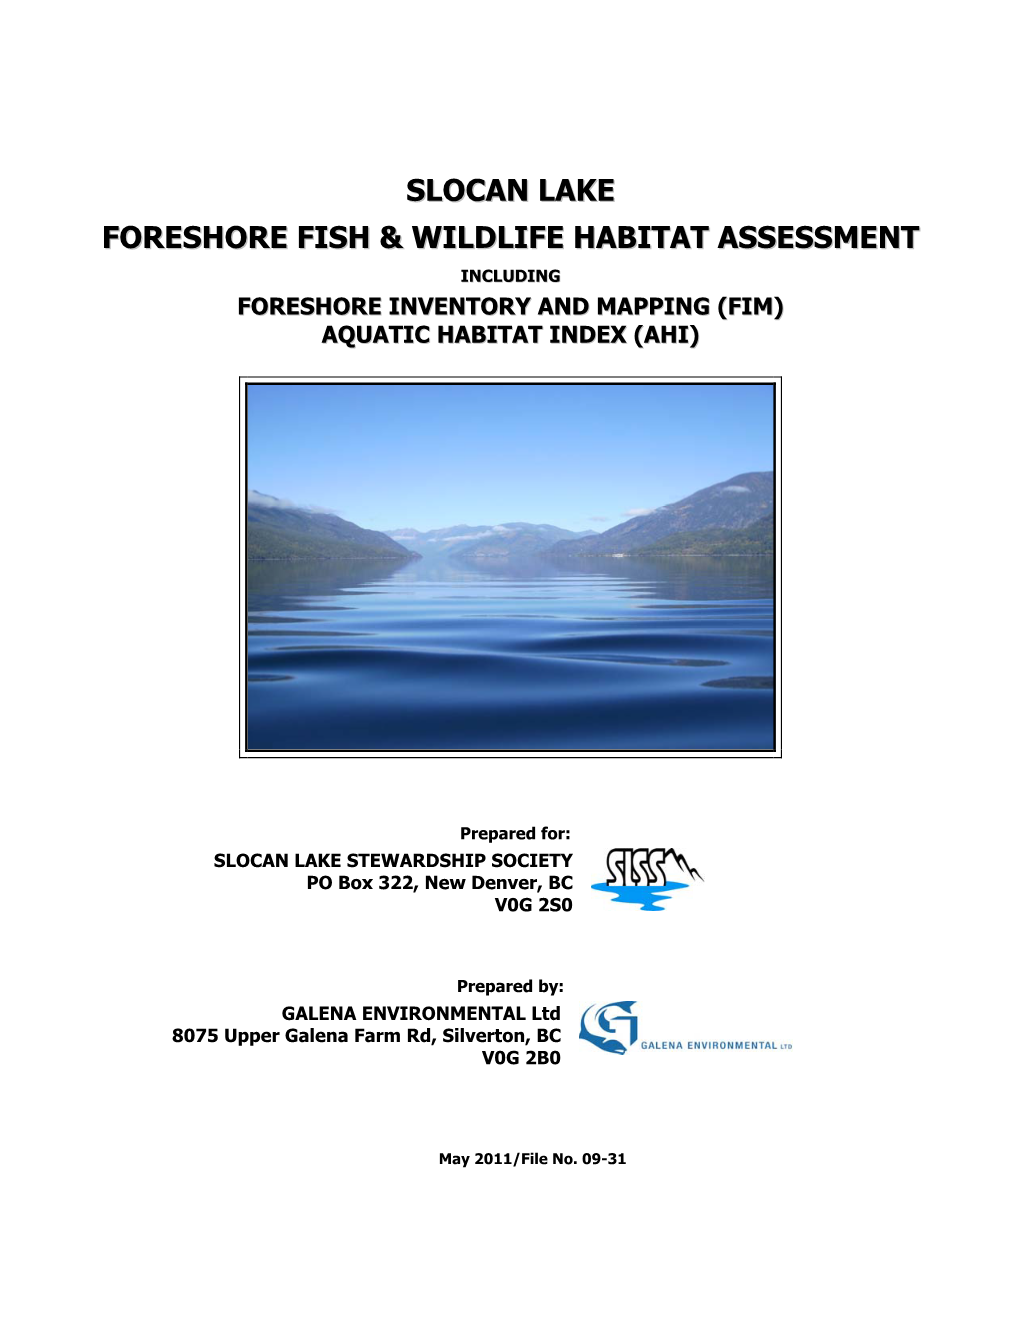 Slocan Lake Foreshore Fish & Wildlife